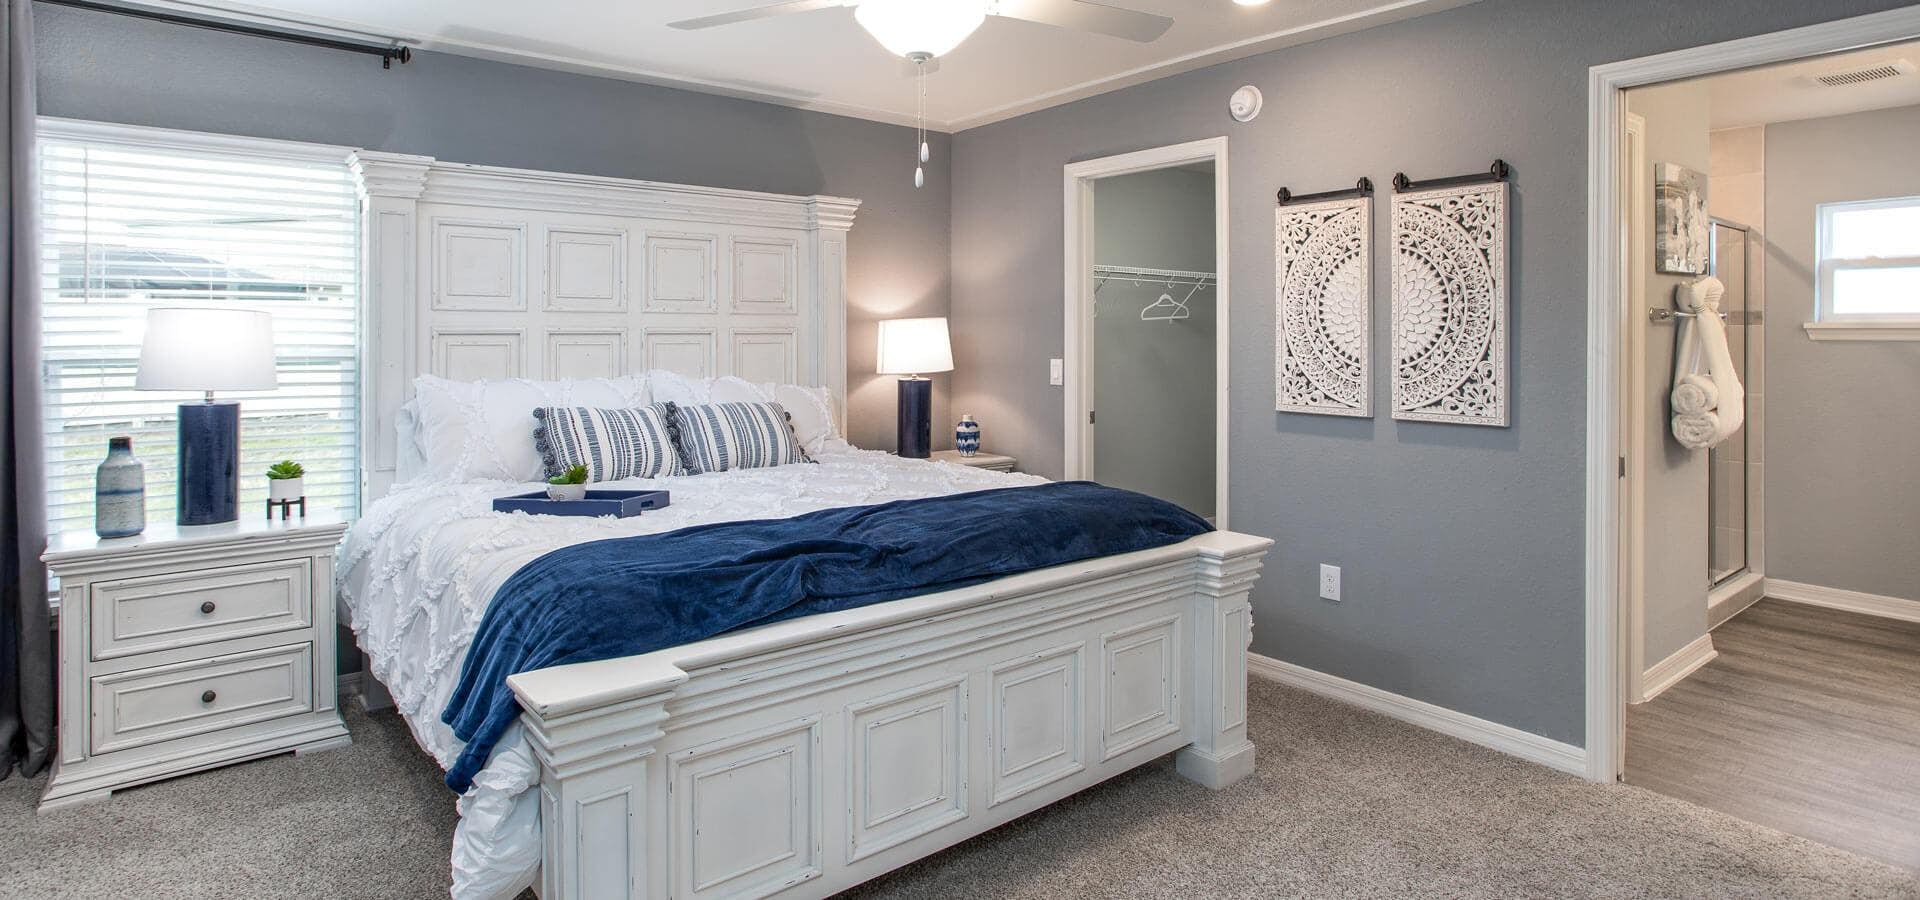 Soft blue-toned owner's suite